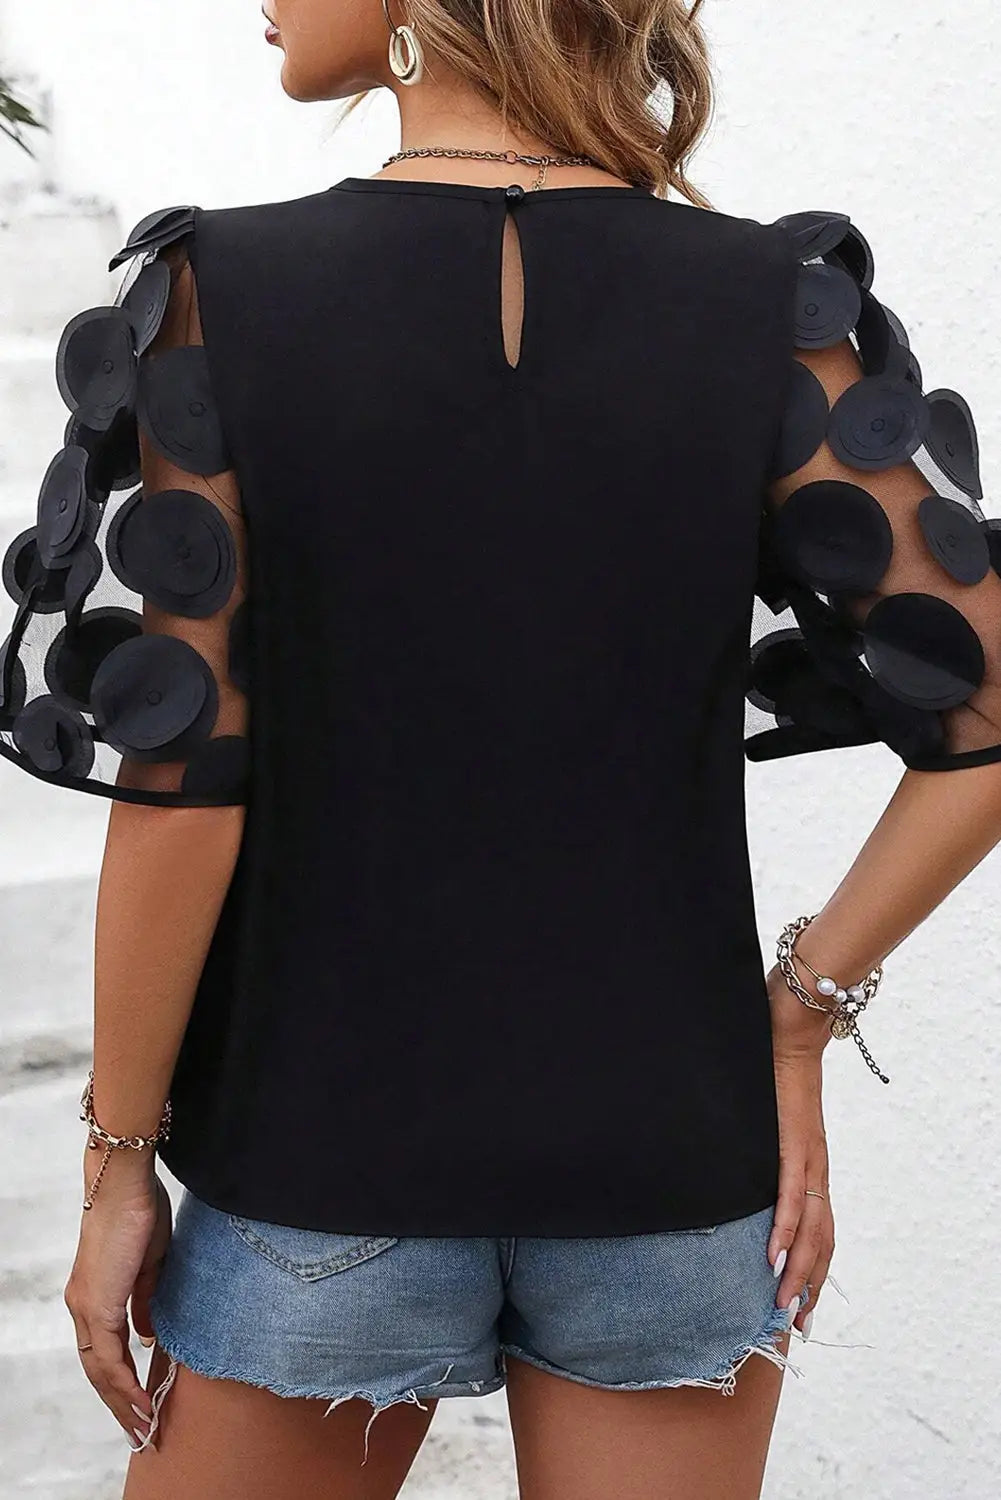 Applique mesh half sleeve blouse - tops/blouses & shirts